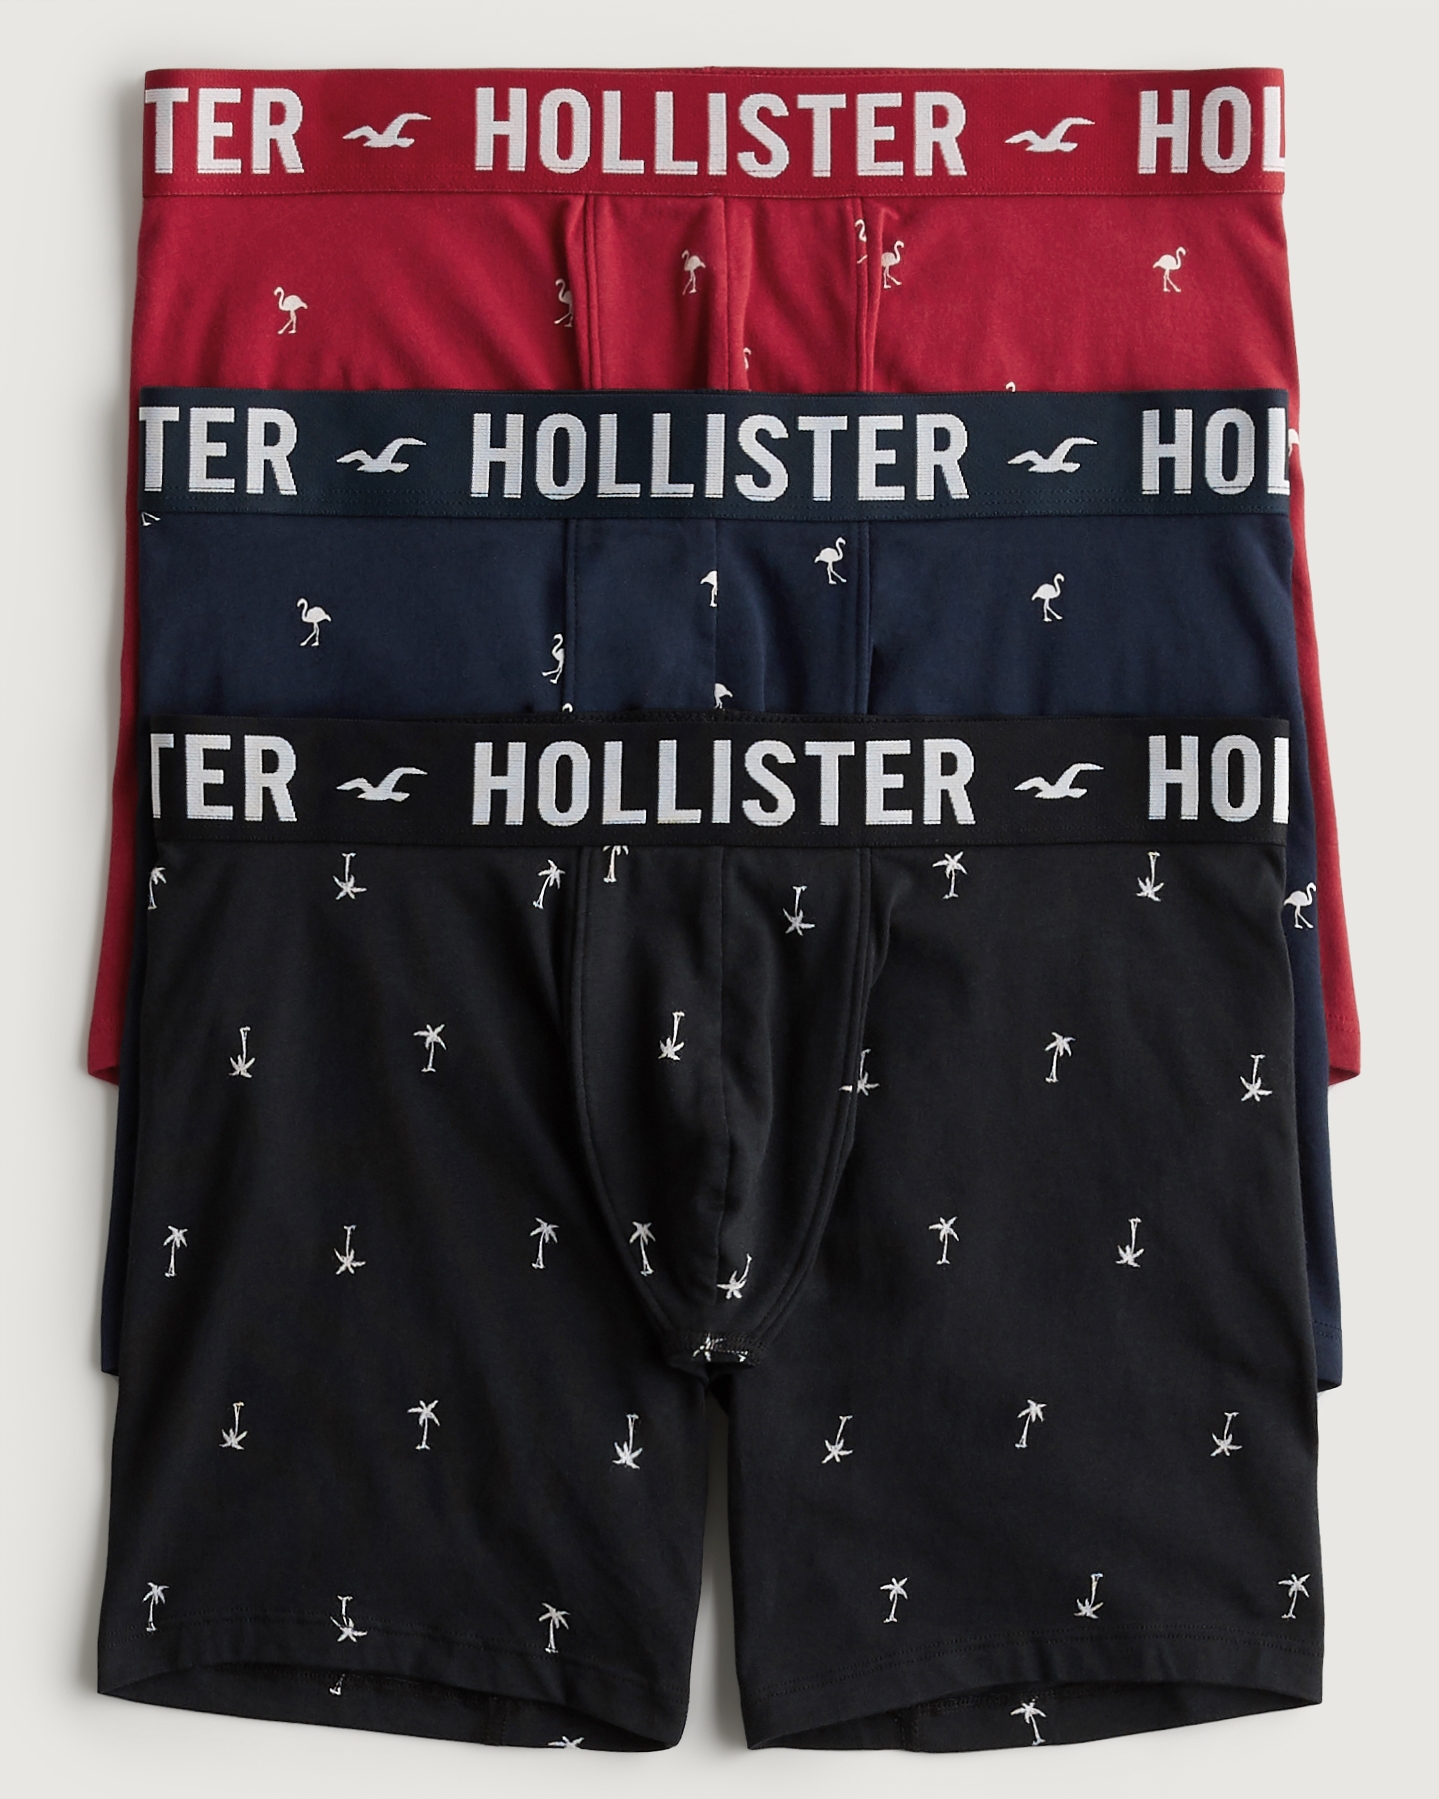 Hollister 5 pack trunks in blue